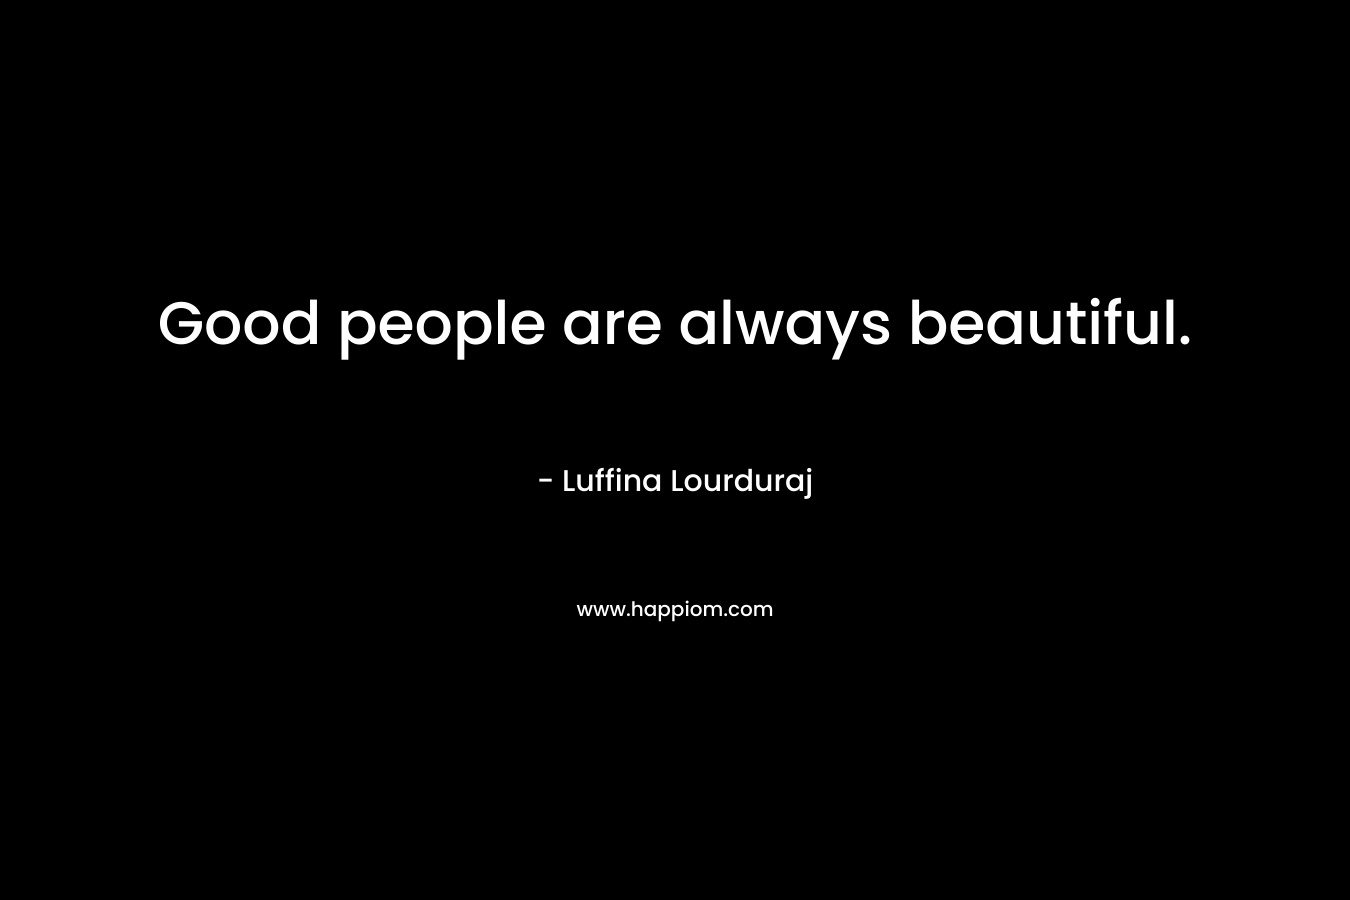 Good people are always beautiful.